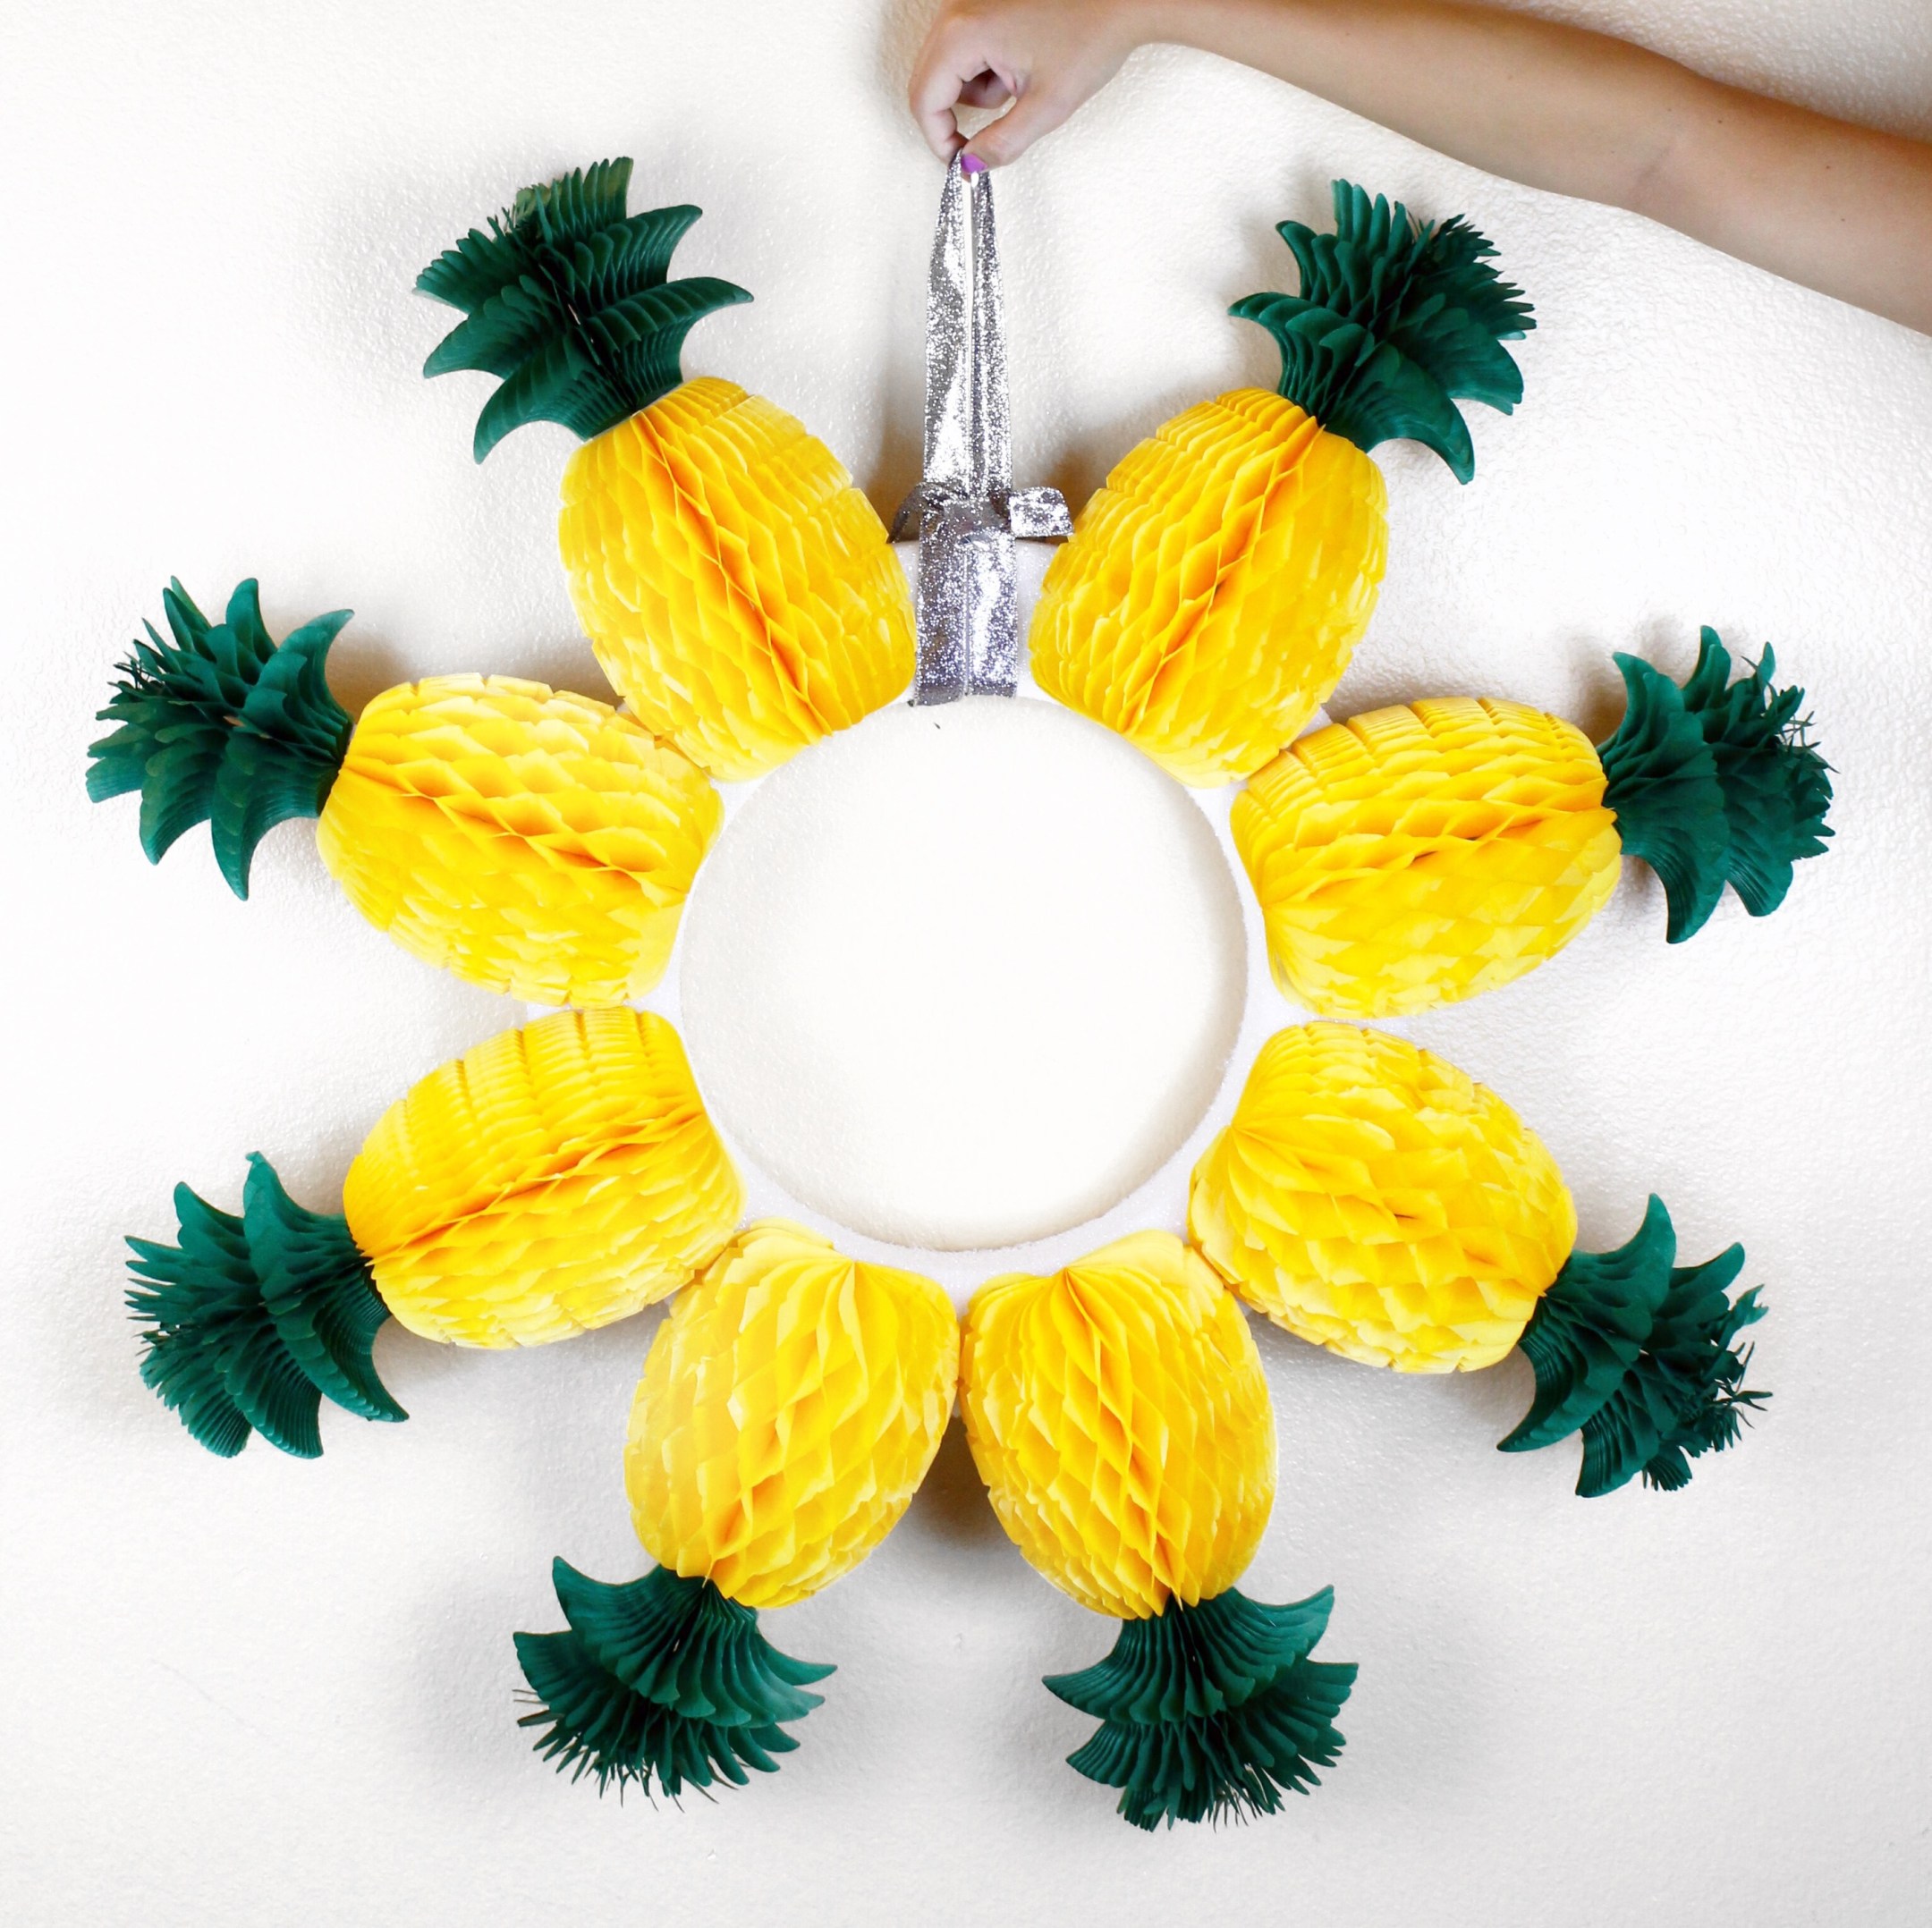 DIY honeycomb pineapple wreath